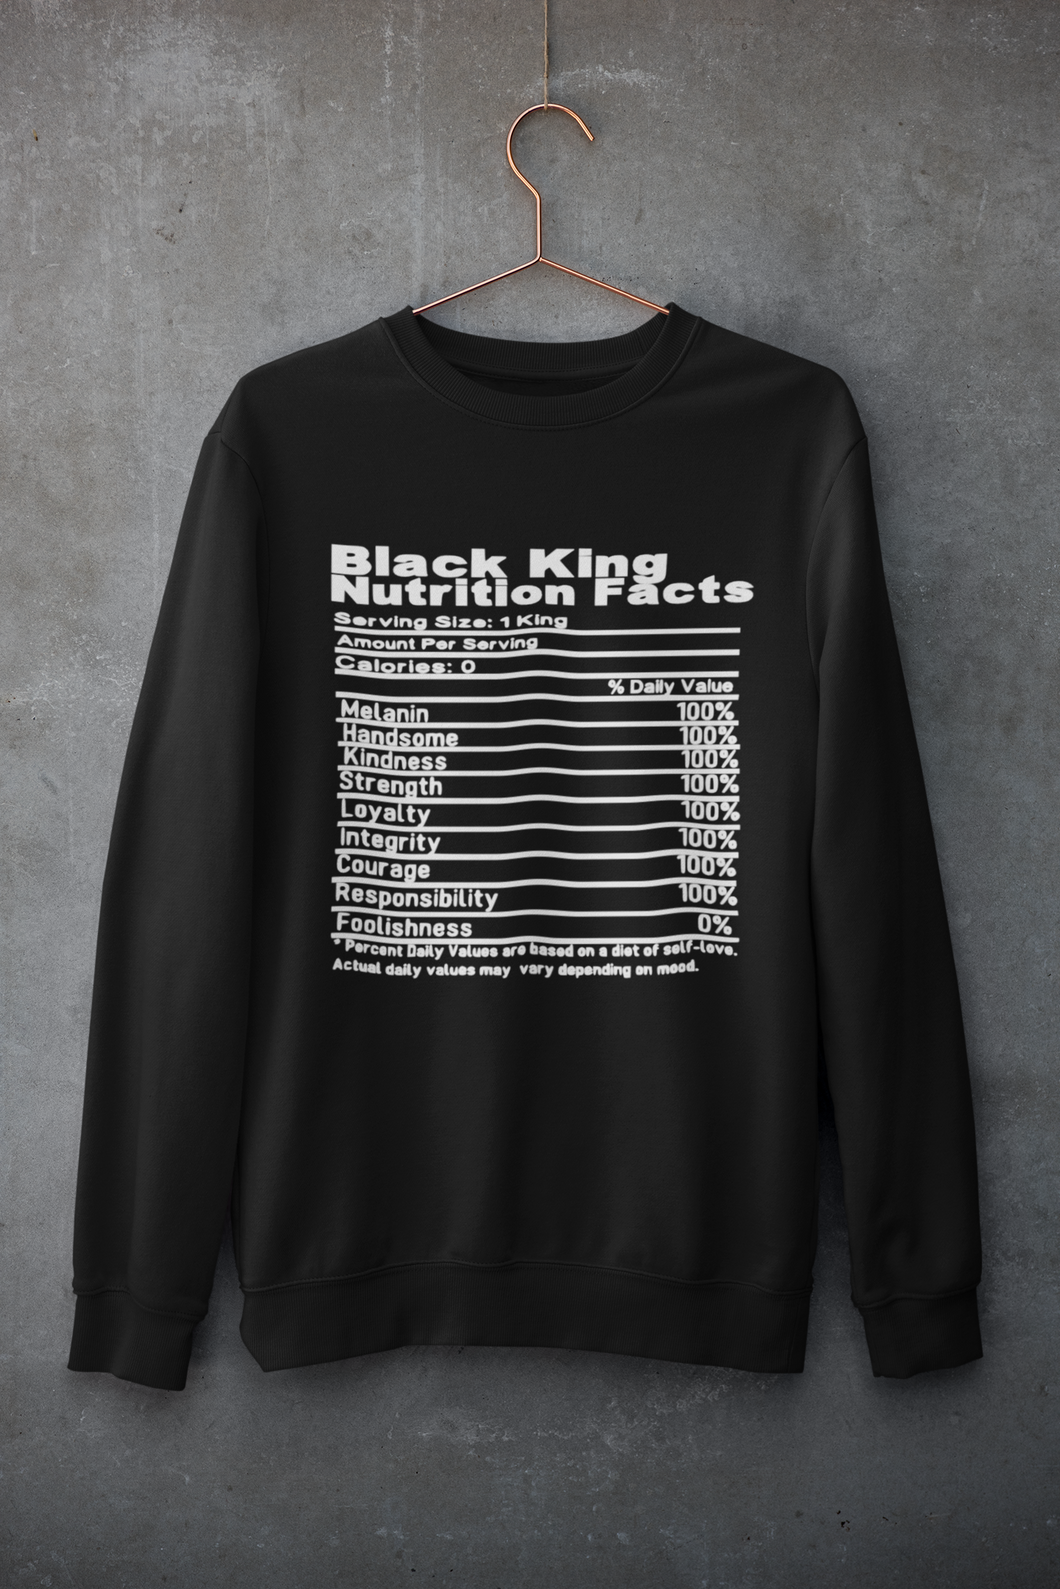 Black King Nutrition Facts Sweatshirt